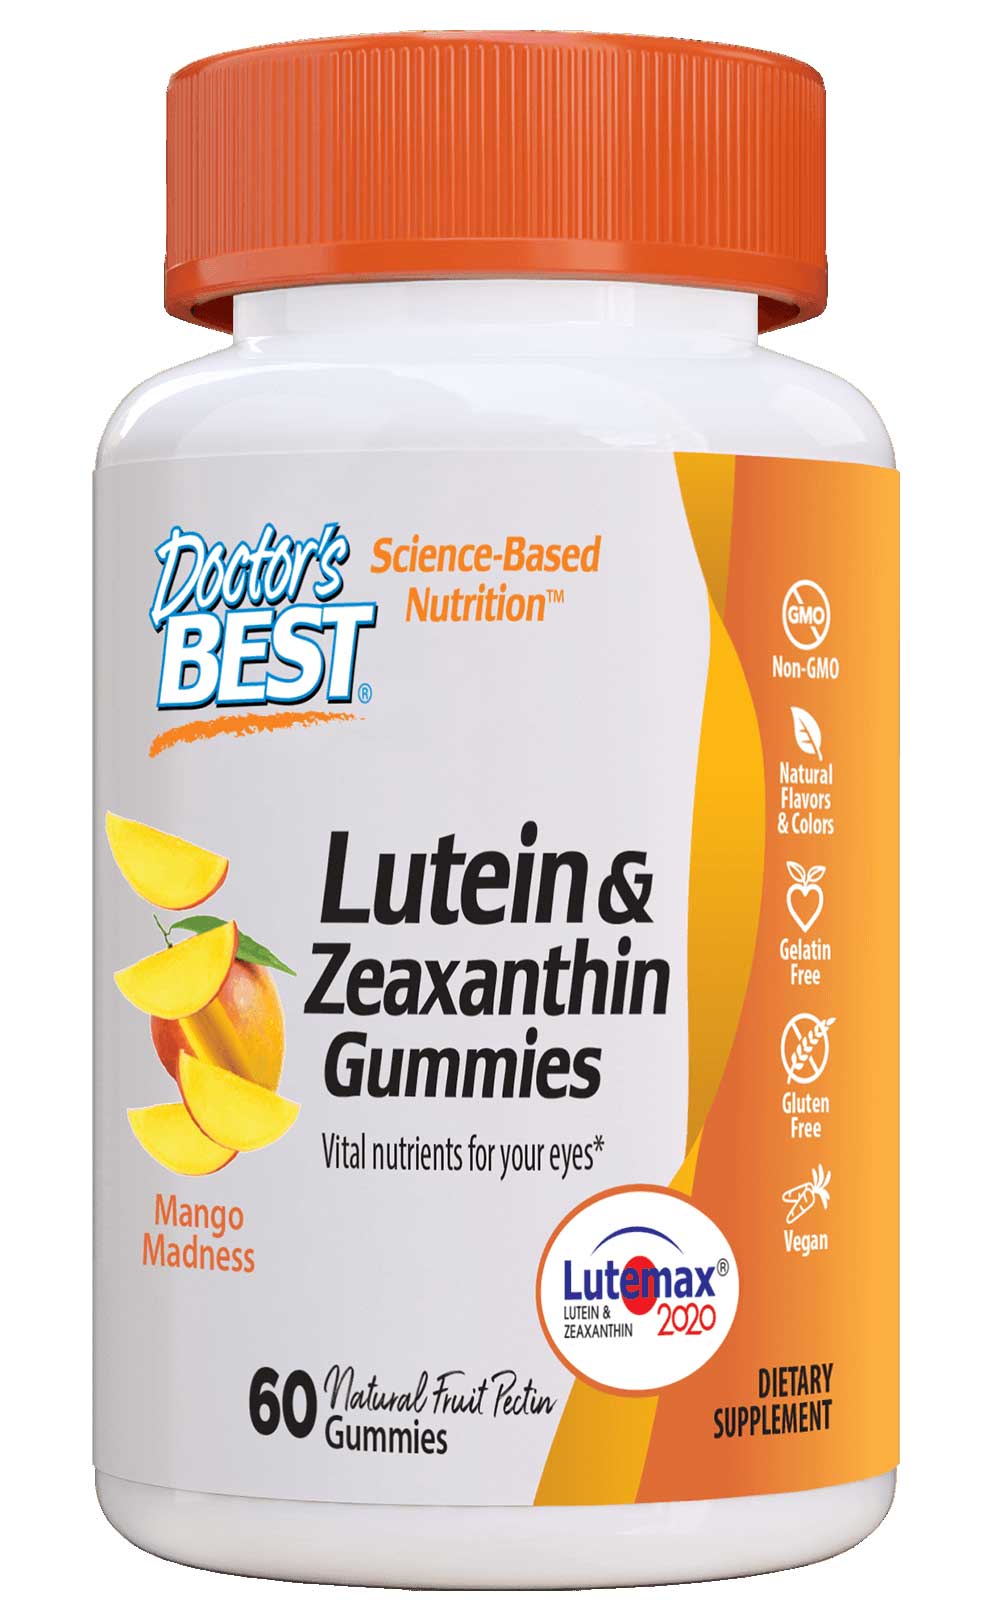 Doctor's Best Lutein & Zeaxanthin Gummies